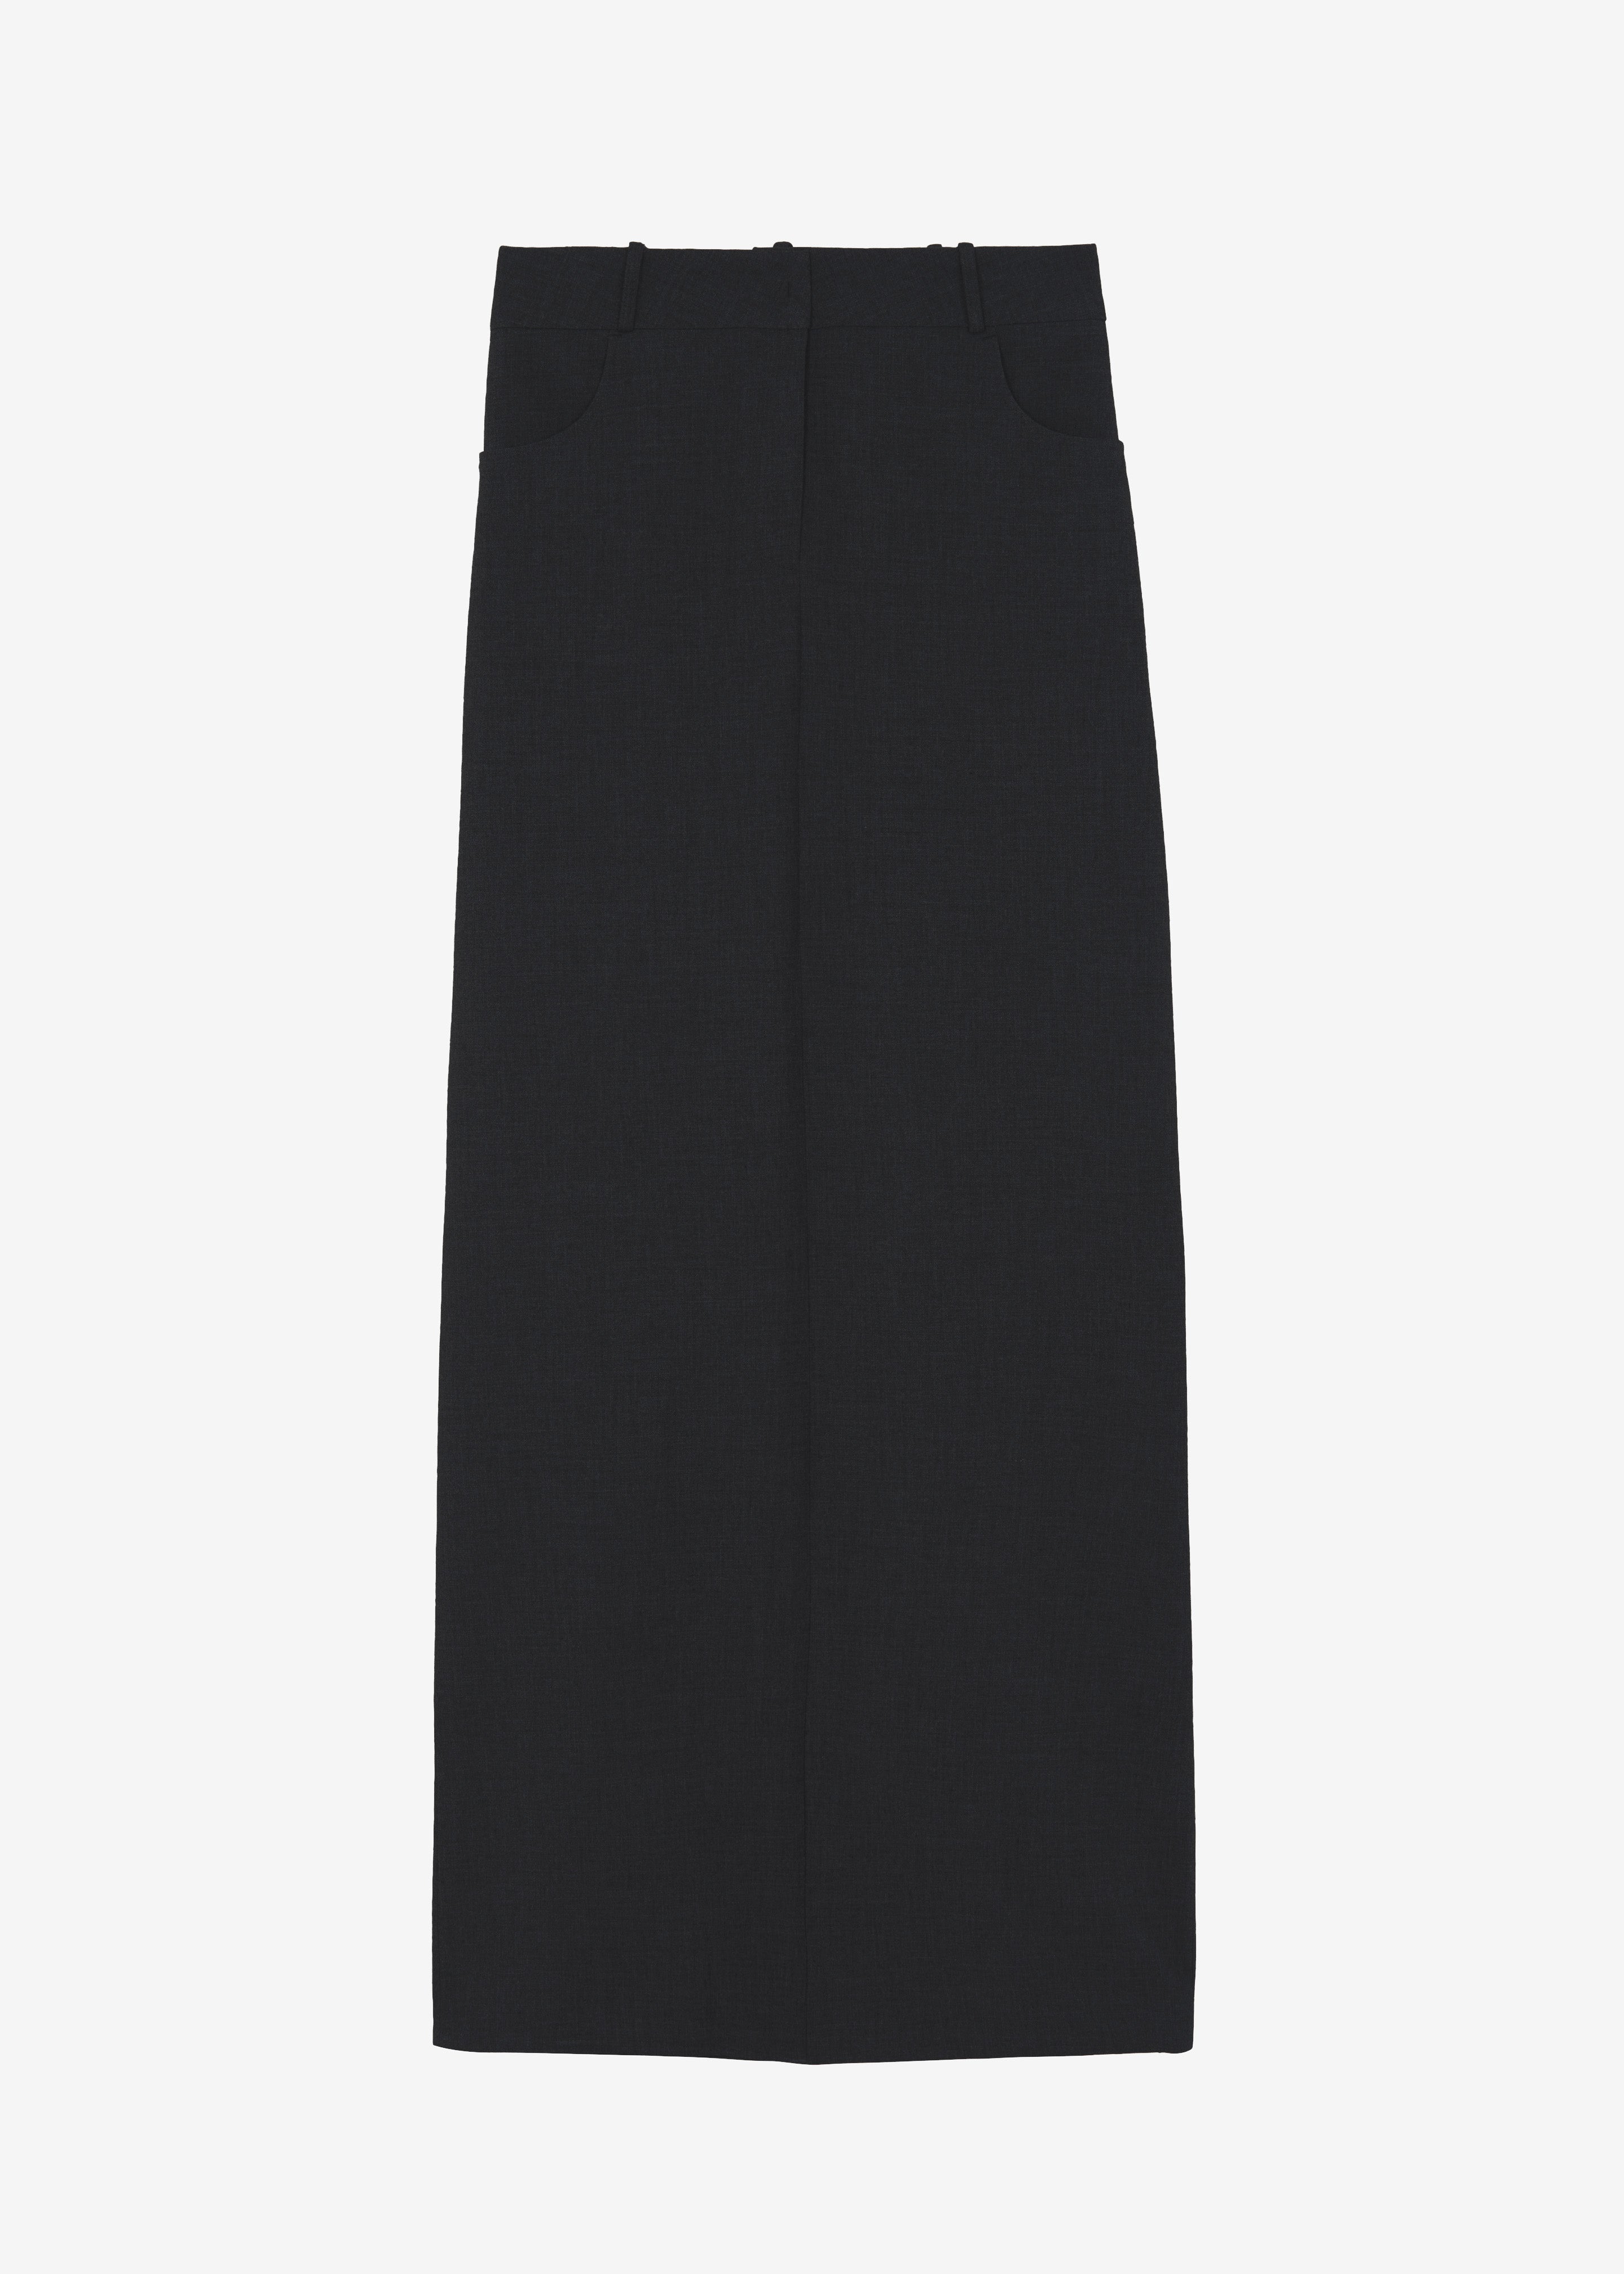 Malvo Long Pencil Skirt - Black - 12